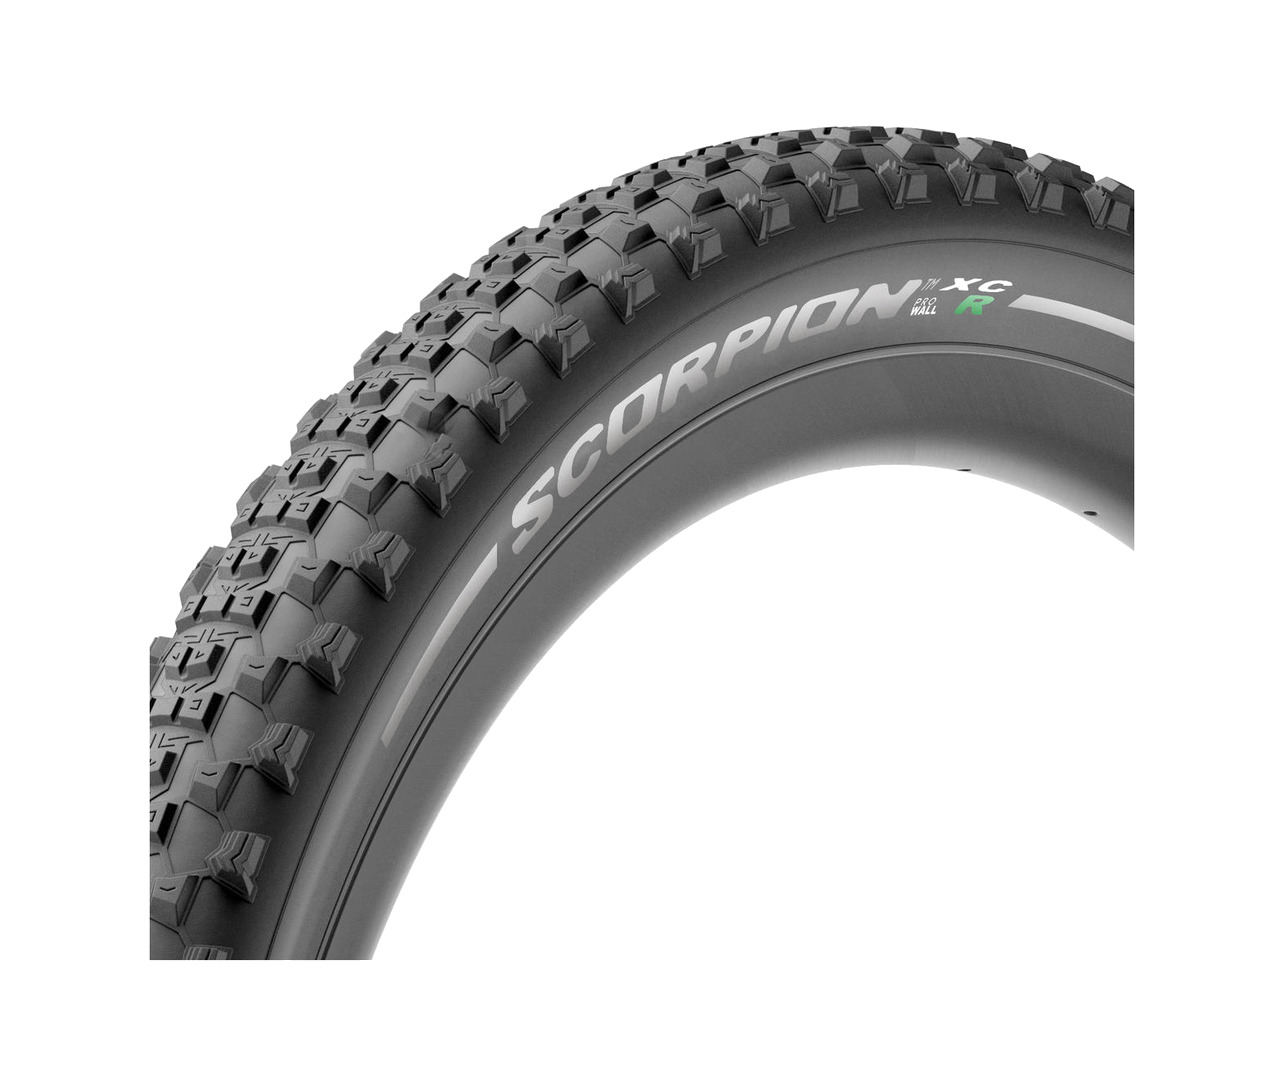 MTB SCORPION XC R 29 X 2.2 Rear Wheel Bicycle Tire Covers-